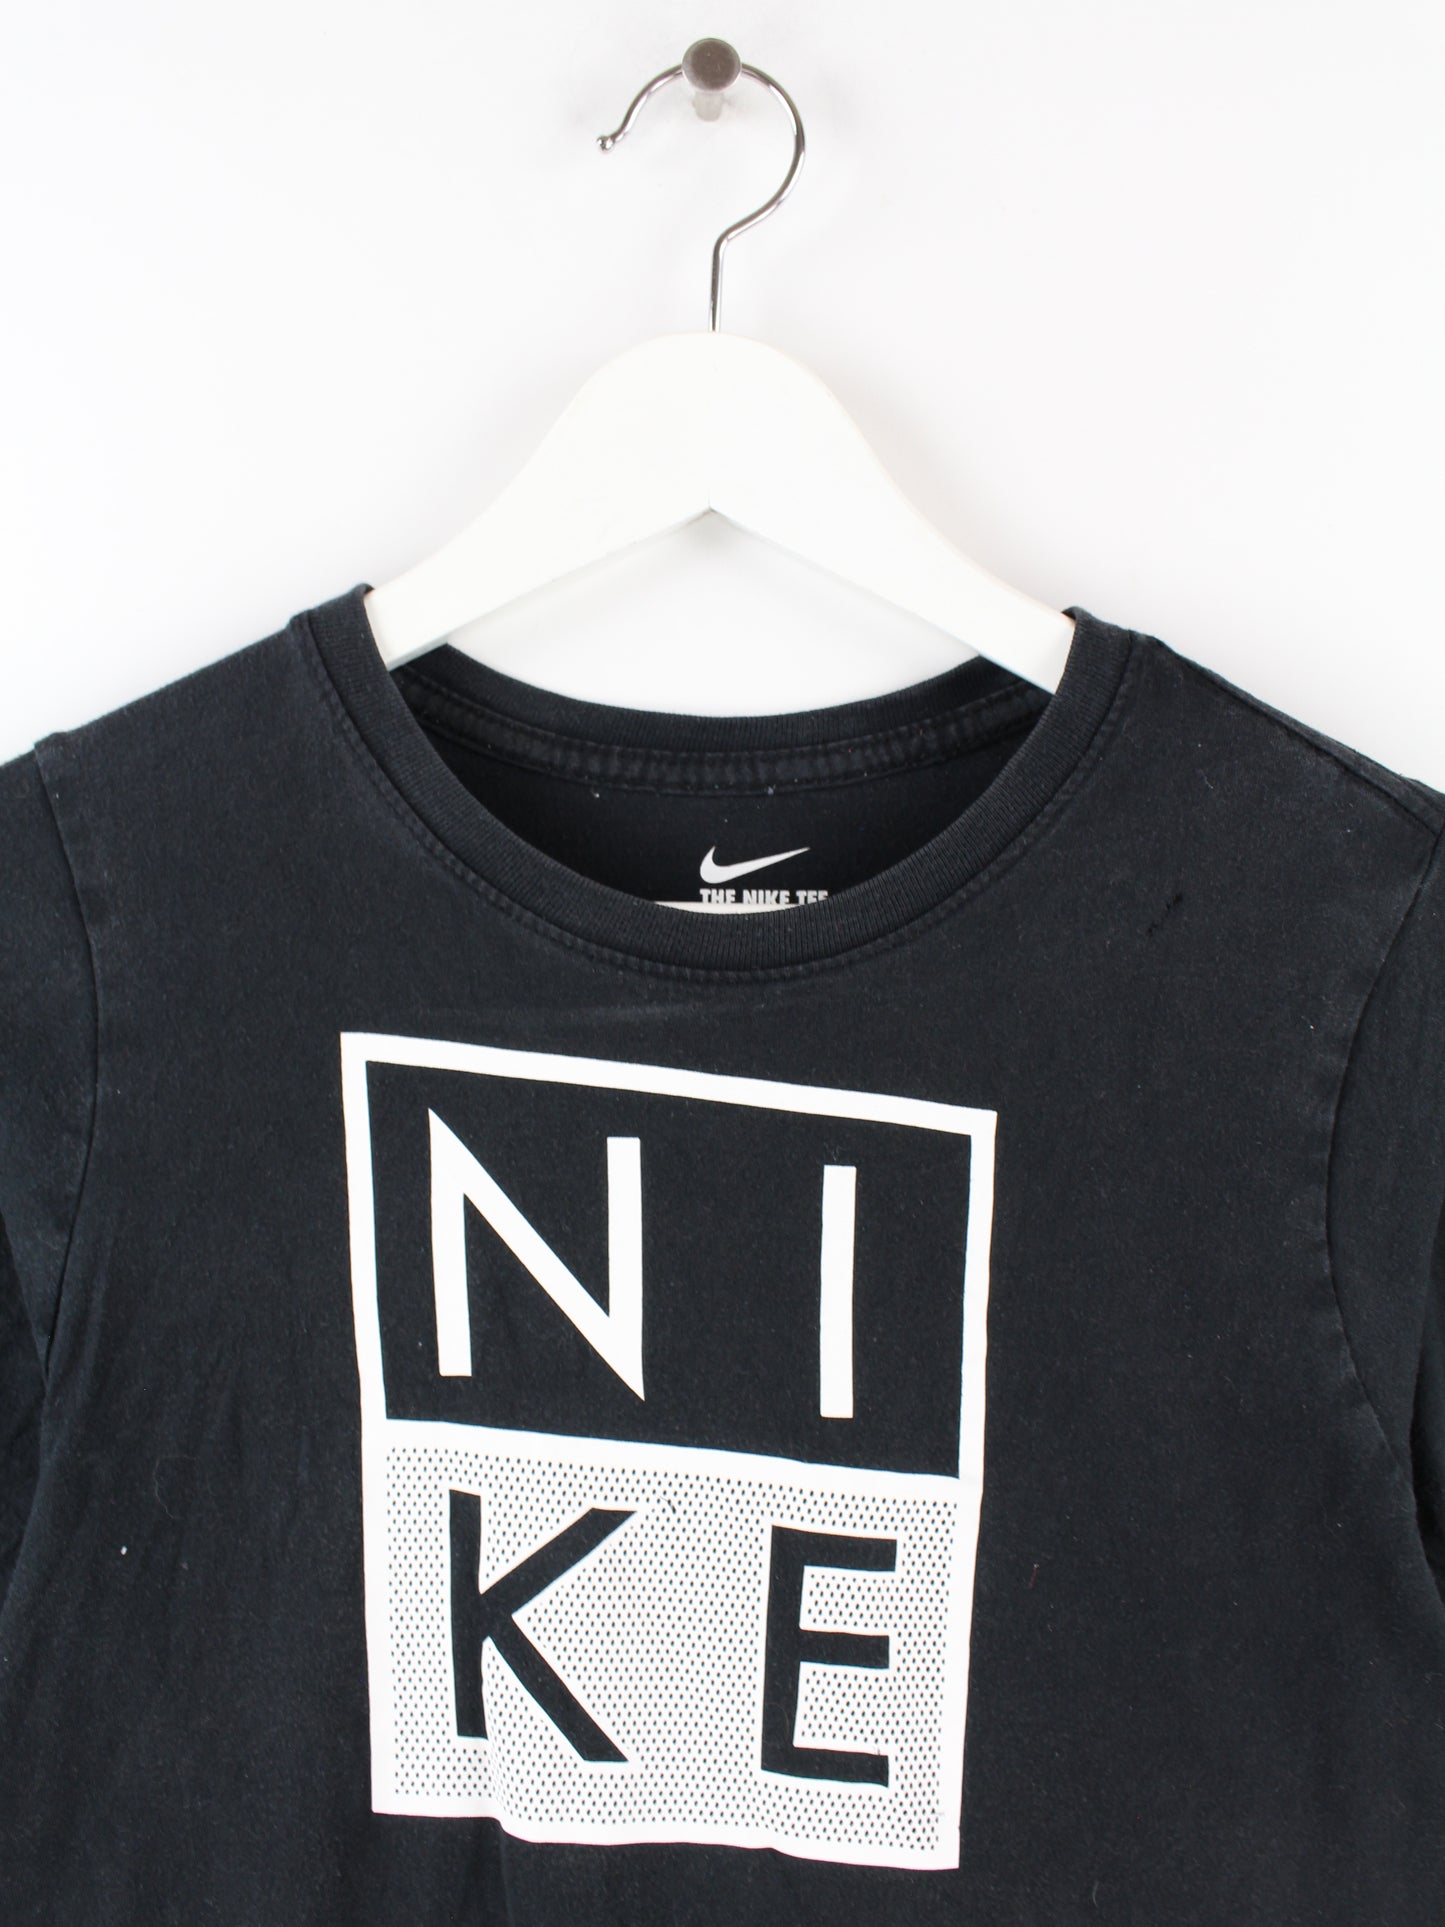 Nike T-Shirt Schwarz XL